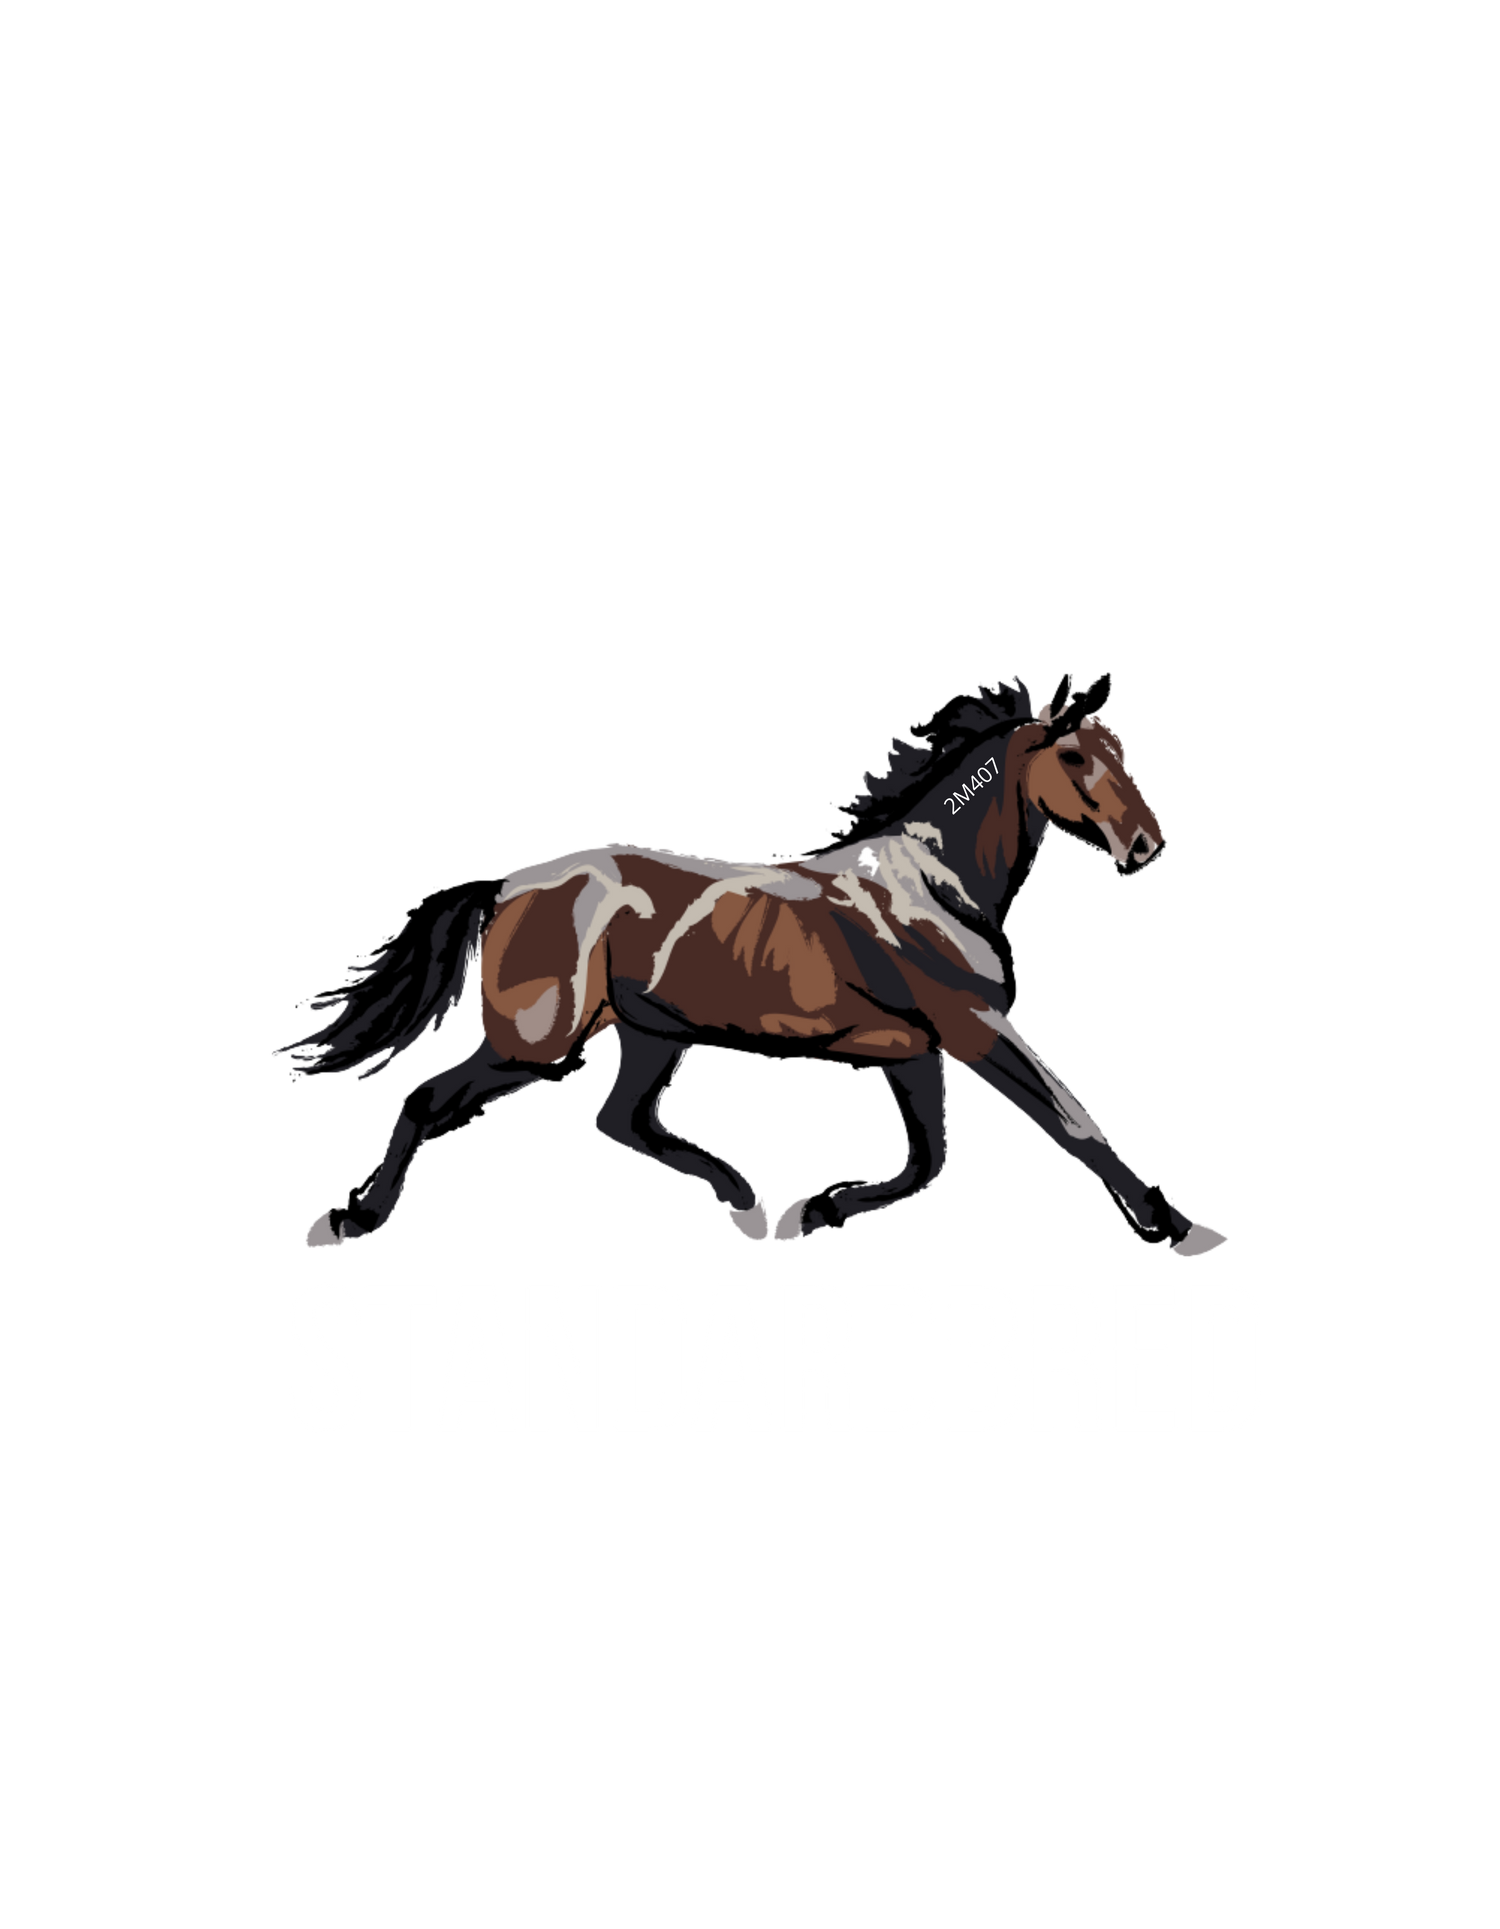 Standardbred